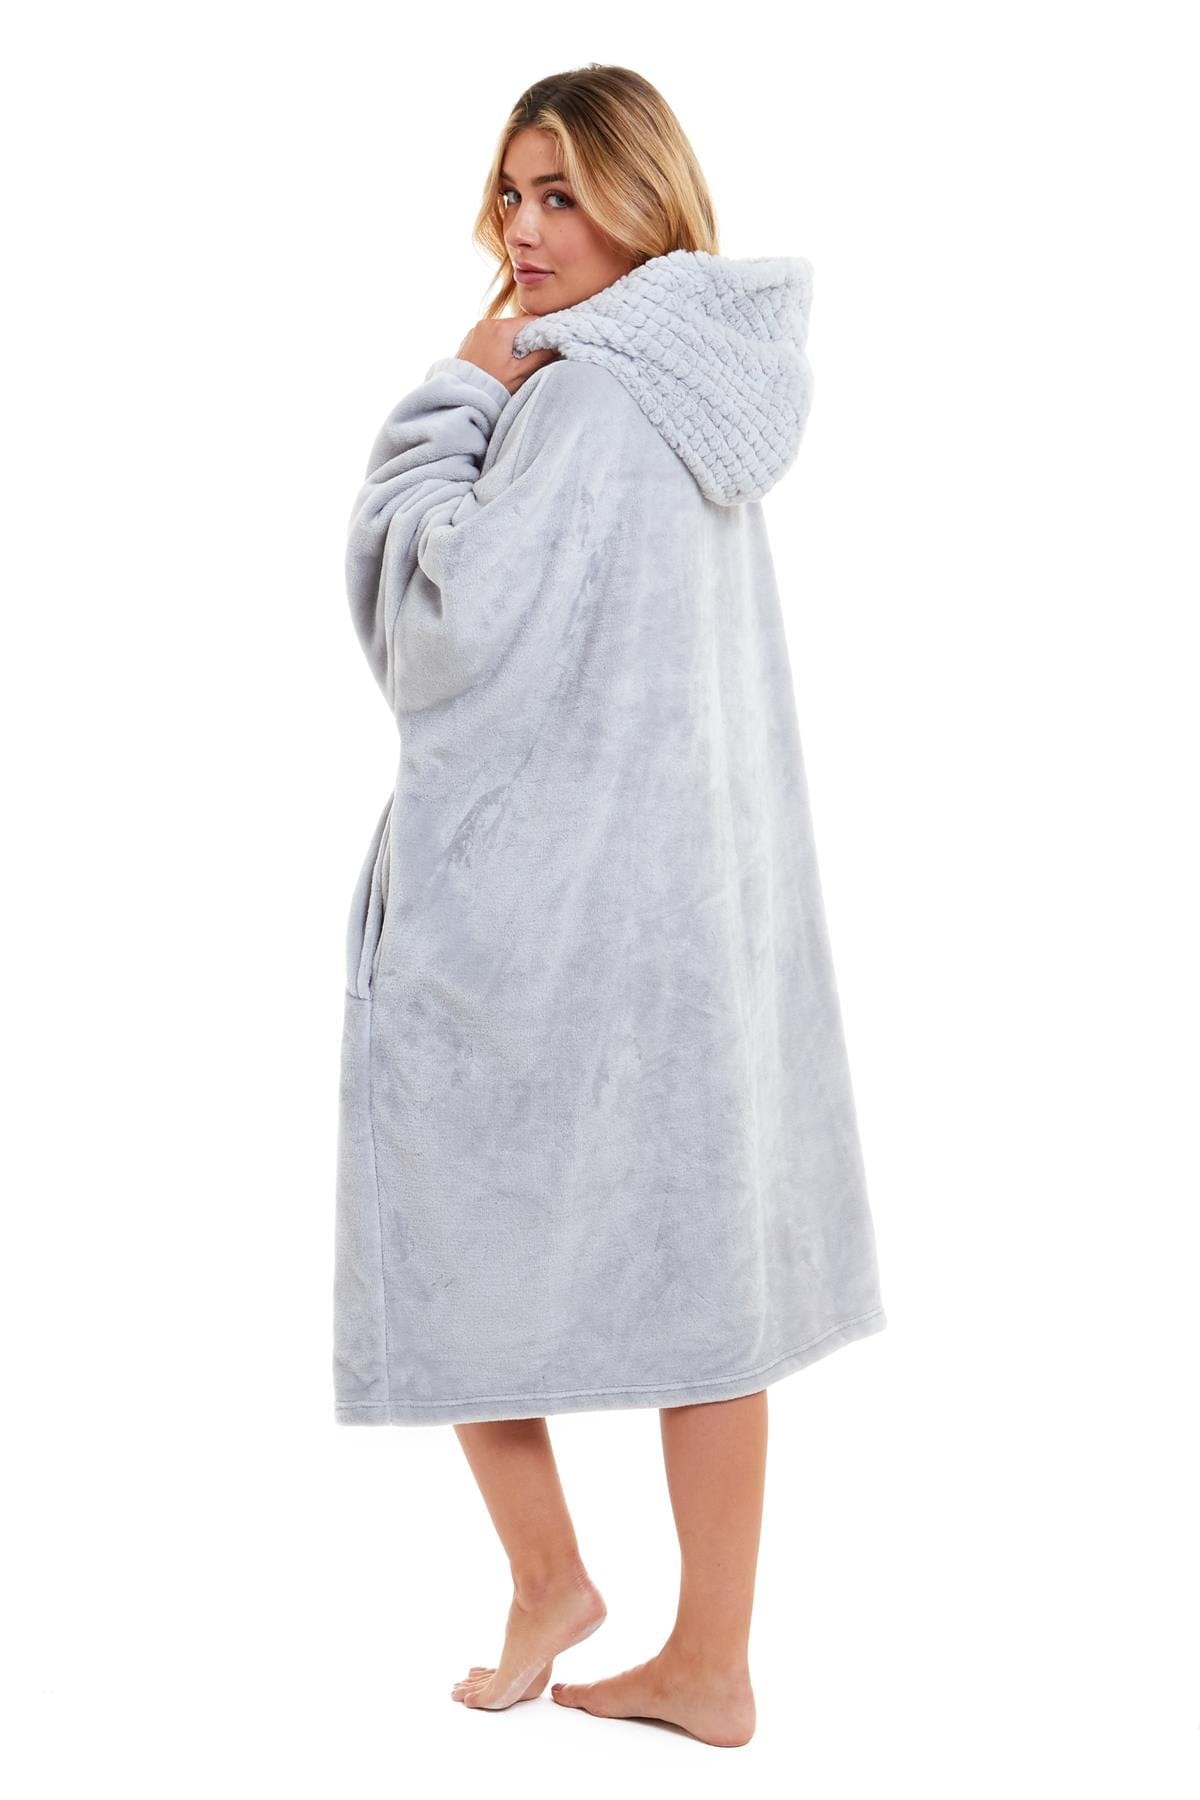 Women's Plush Hooded Poncho Blanket, Ladies Oversized Flannel